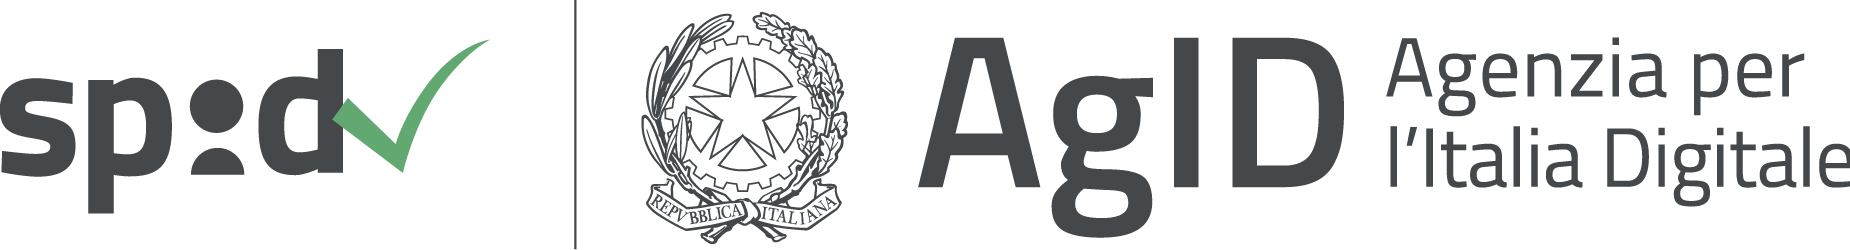 spid agid logo